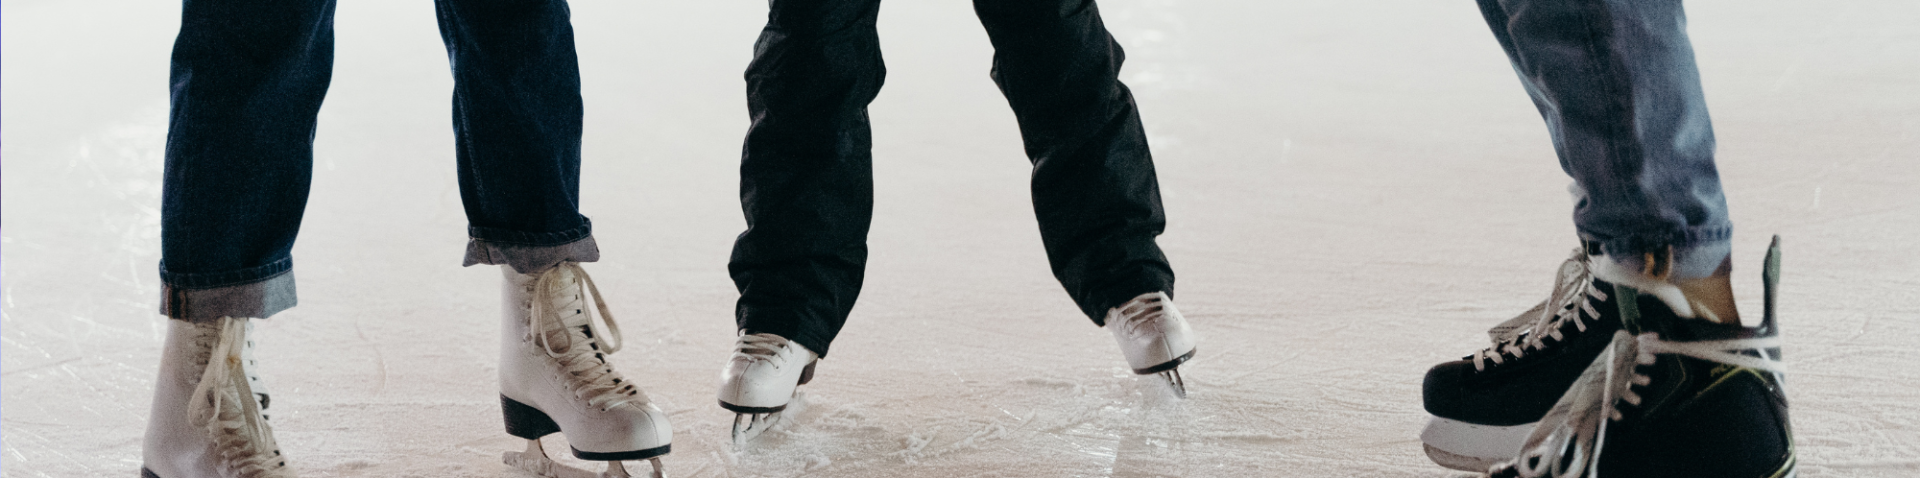 hockey, skating, arena, winter, inside, outside, season